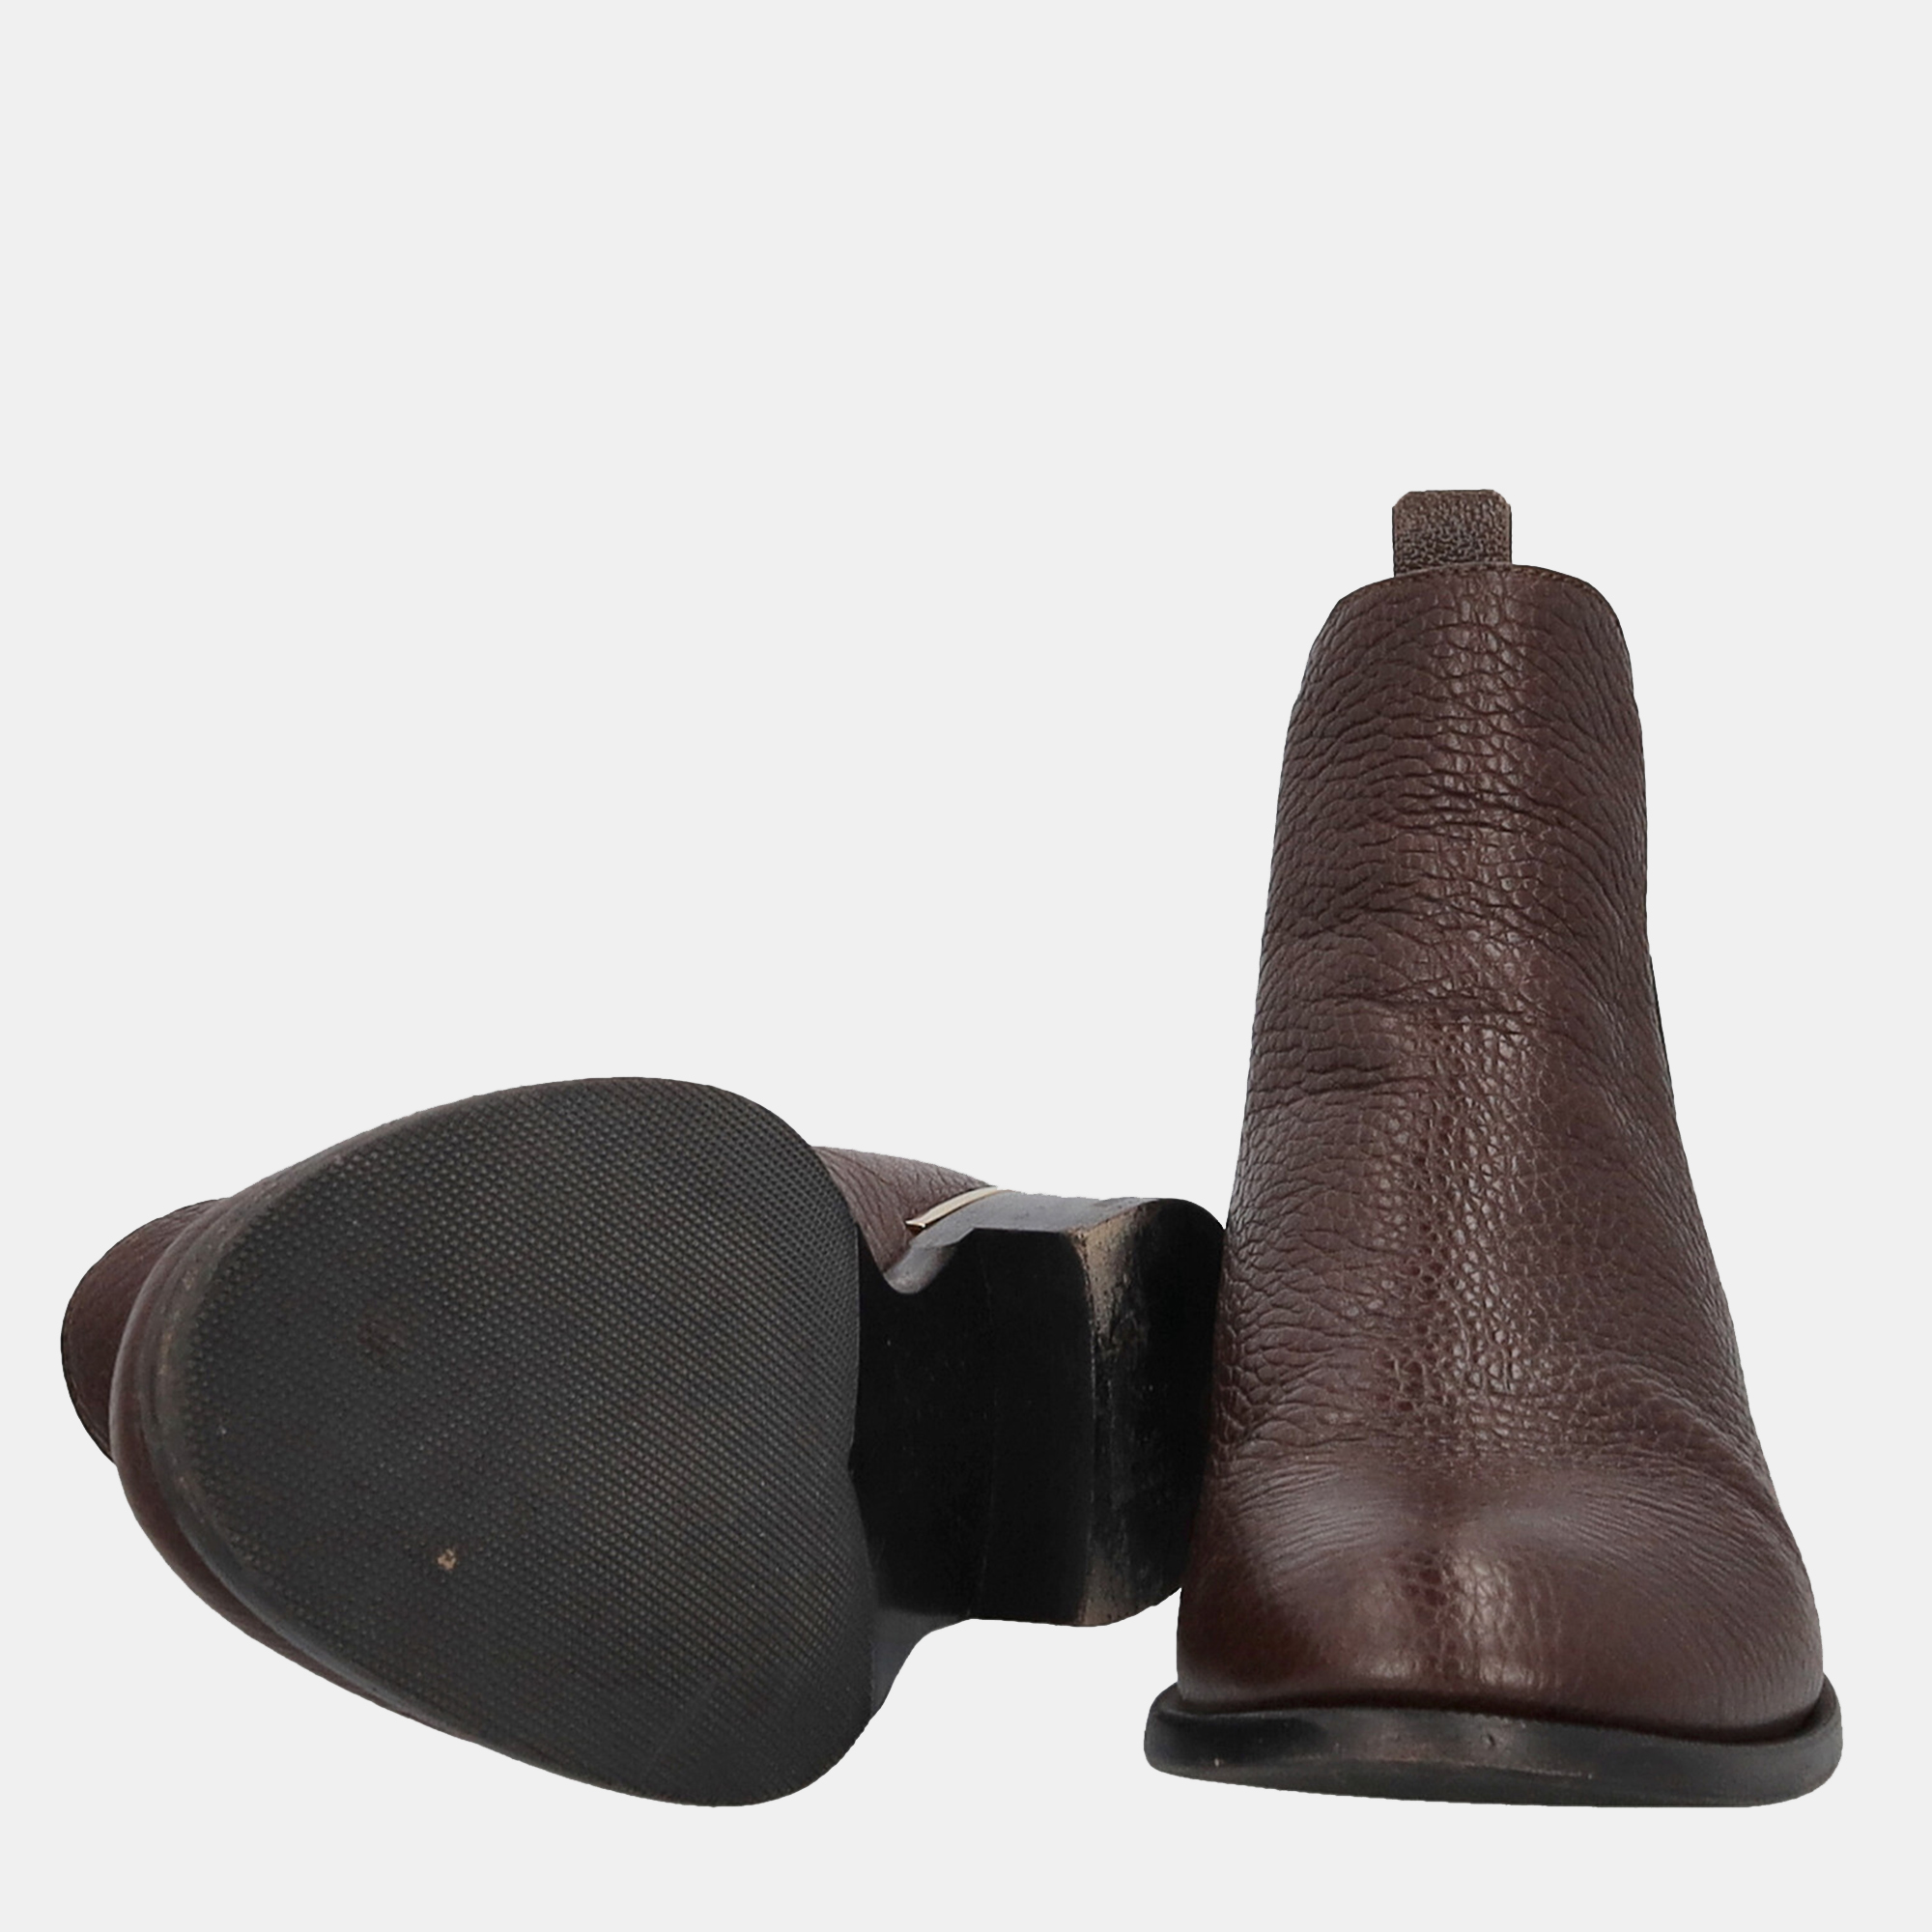 Louis Vuitton  Women's Leather Ankle Boots - Brown - EU 39